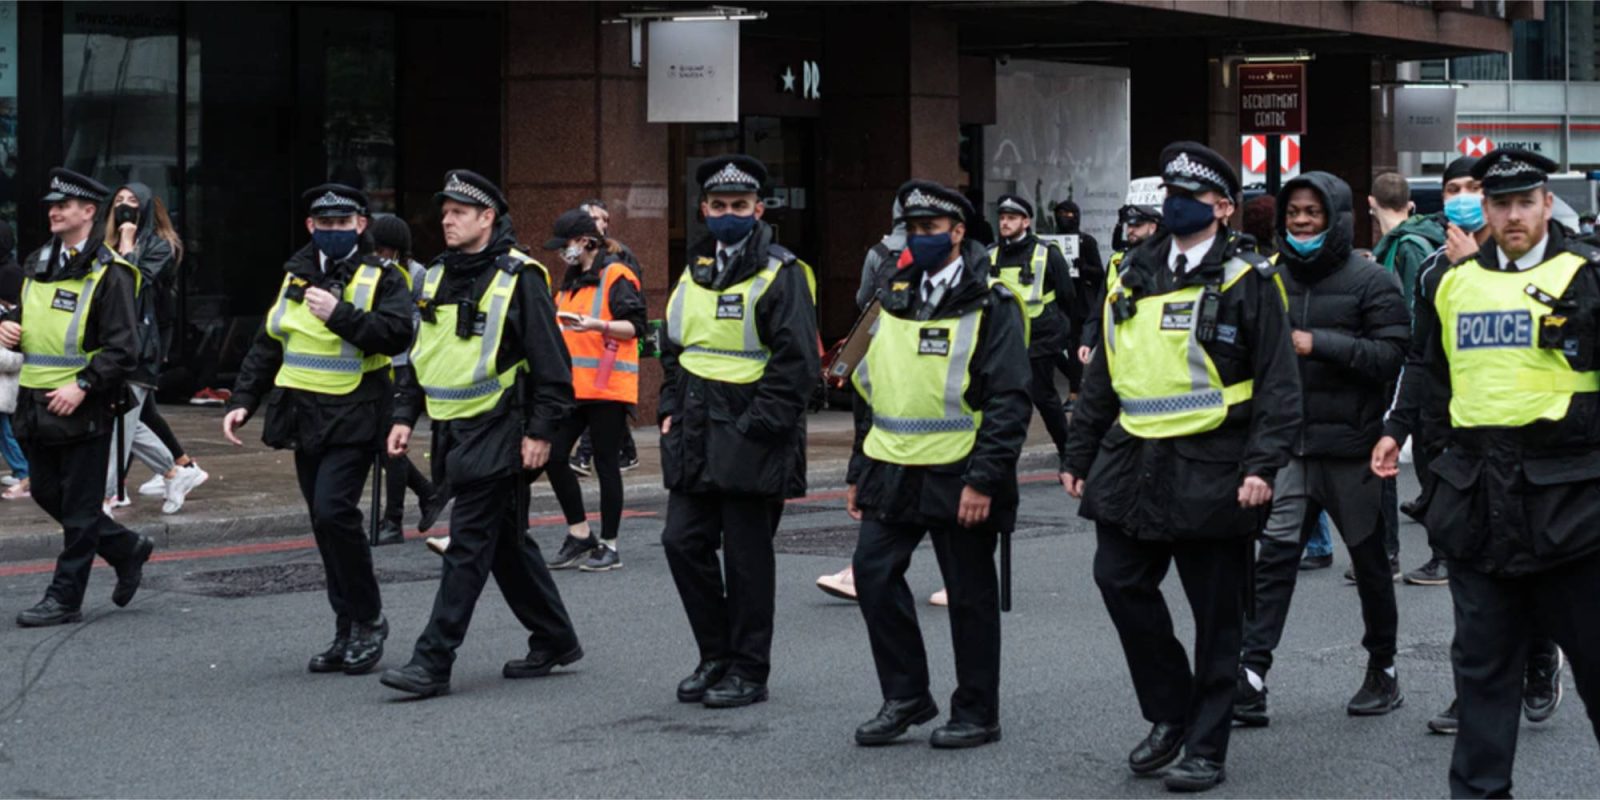 British police drones protests